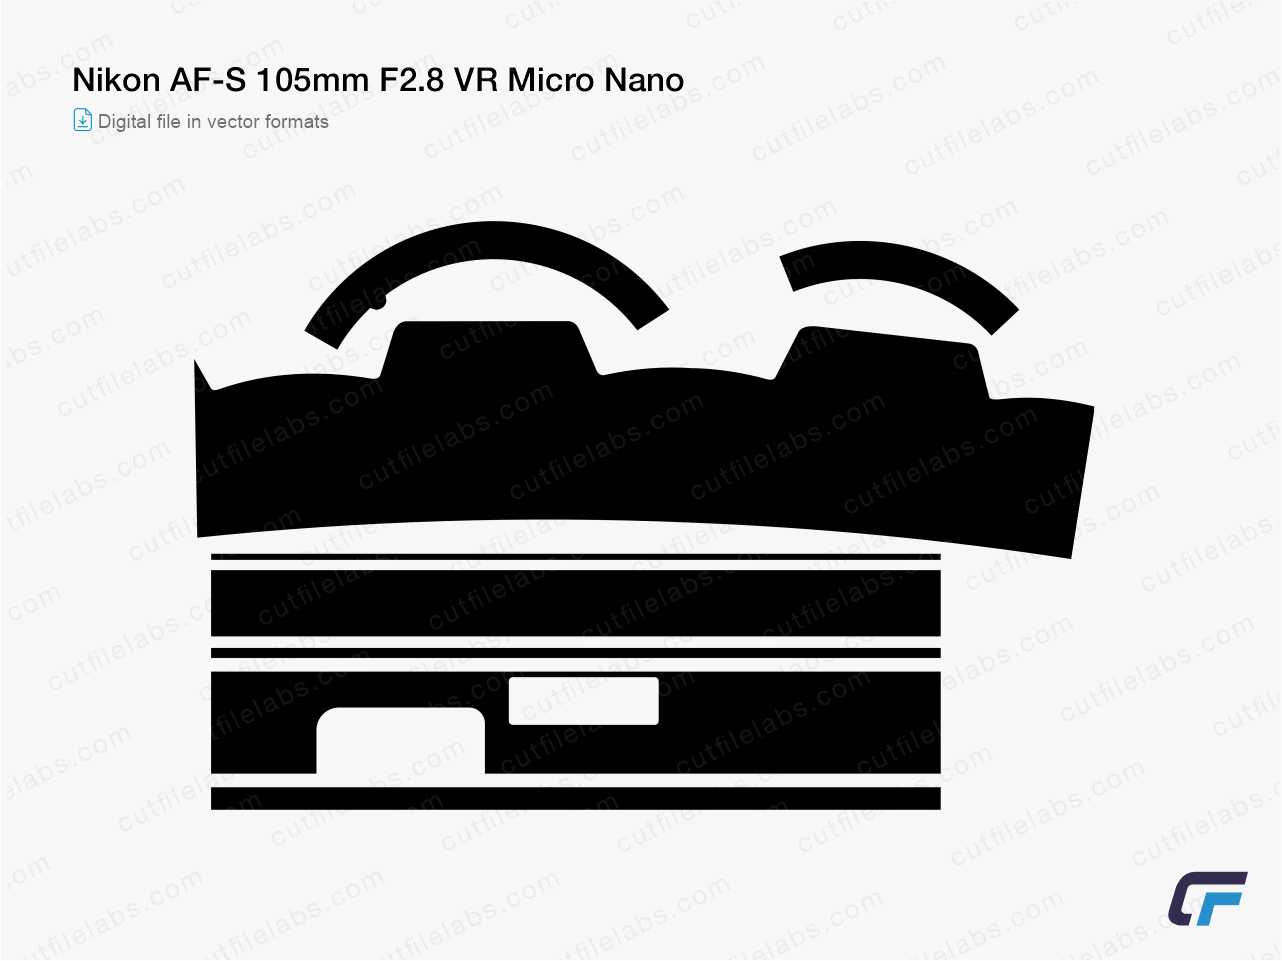 Nikon AF-S 105mm F2.8 VR Micro Nano Cut File Template